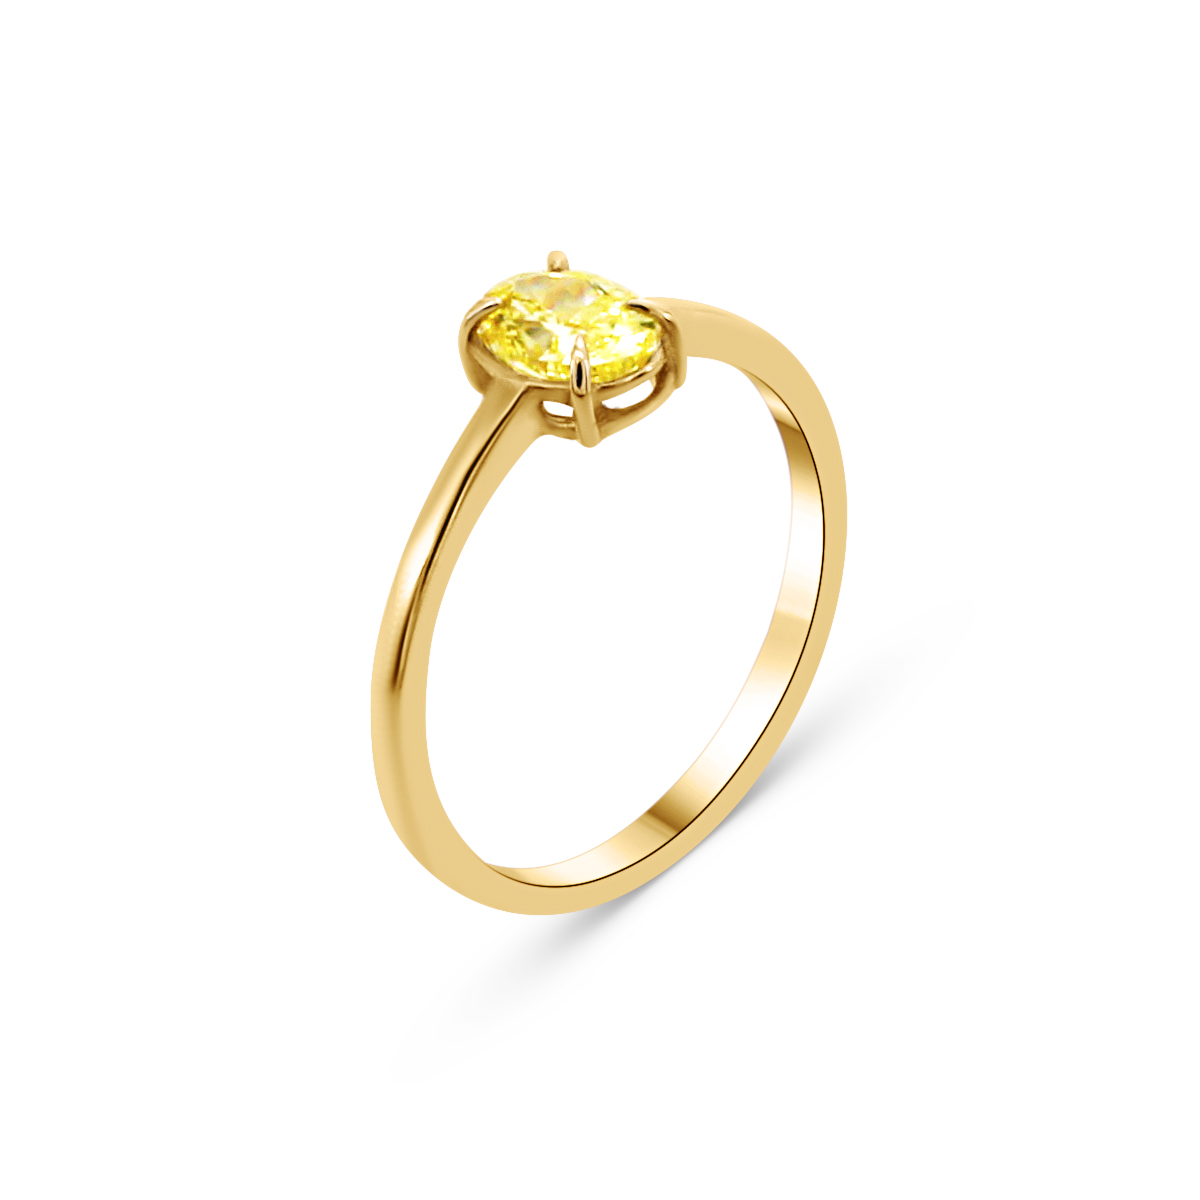 Goldring mit Diamant – “Yellow Diamond”